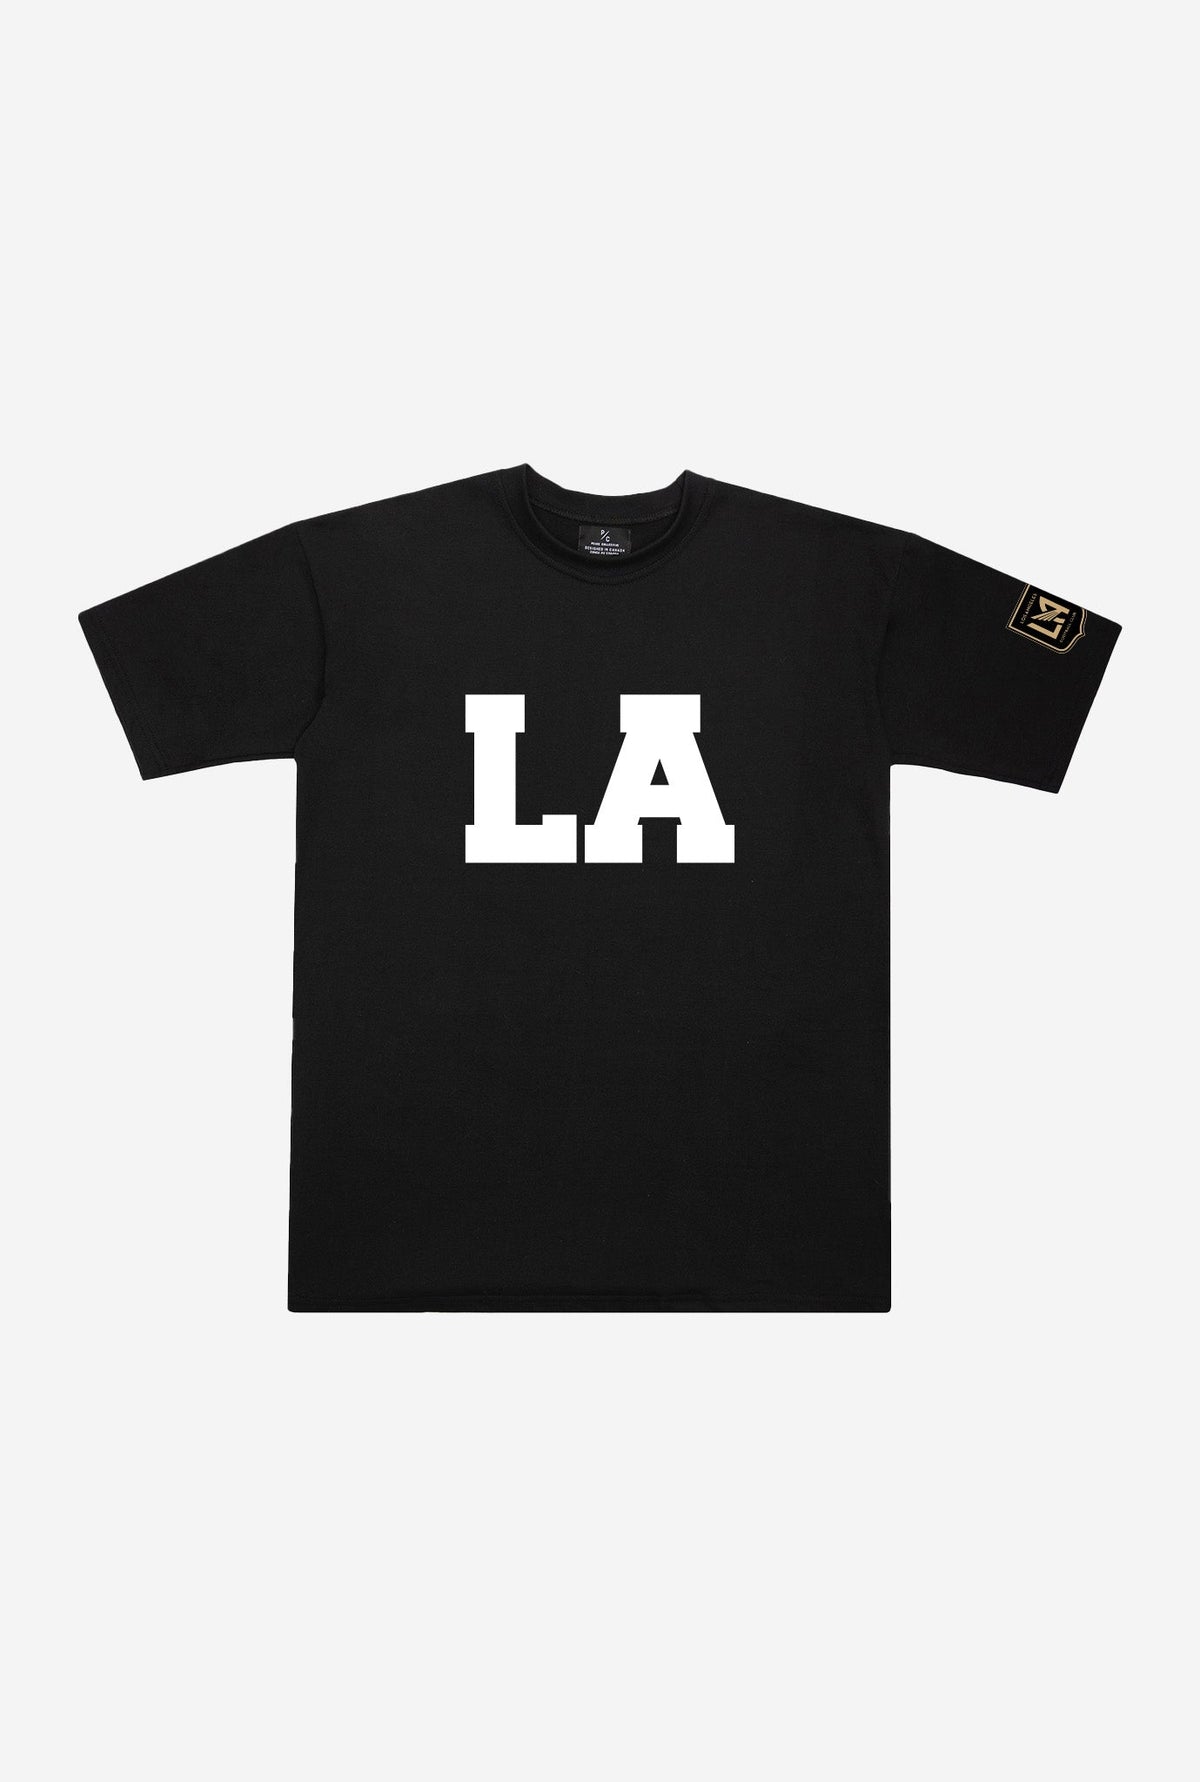 Los Angeles FC "LA" Heavyweight T-Shirt - Black